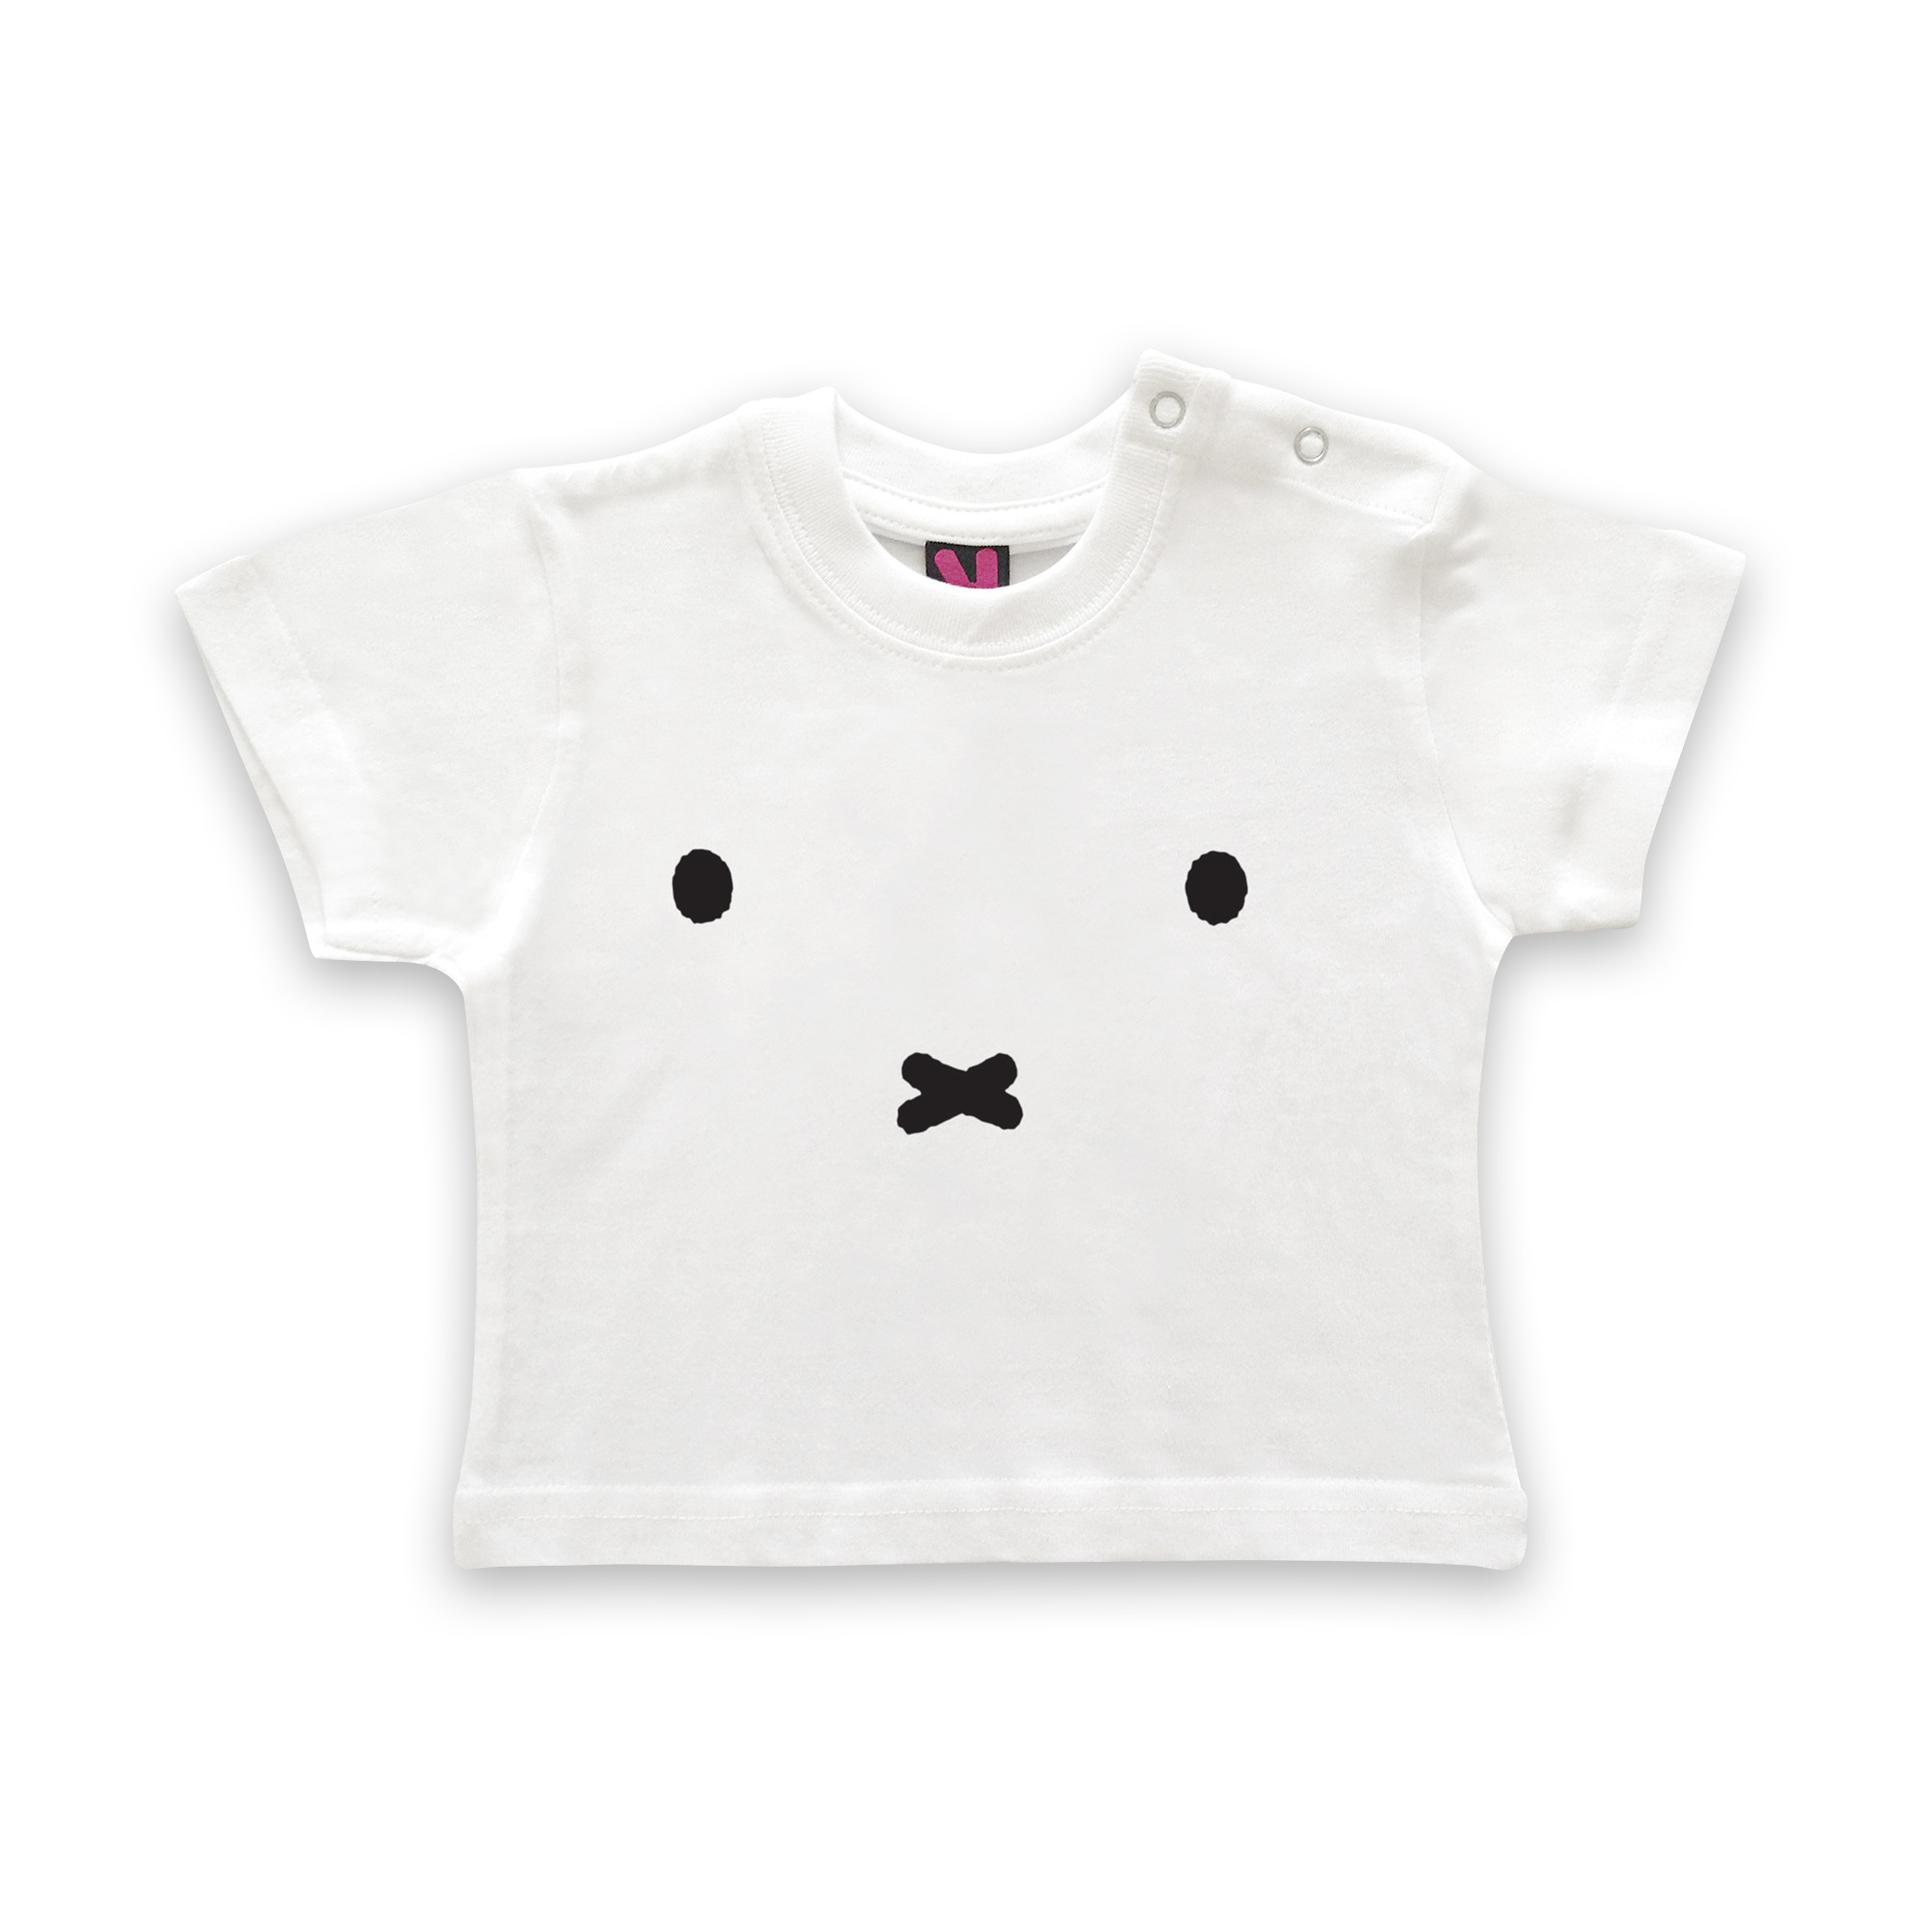 Nijntje snuit - Baby T-shirt - Museum Gift Shop